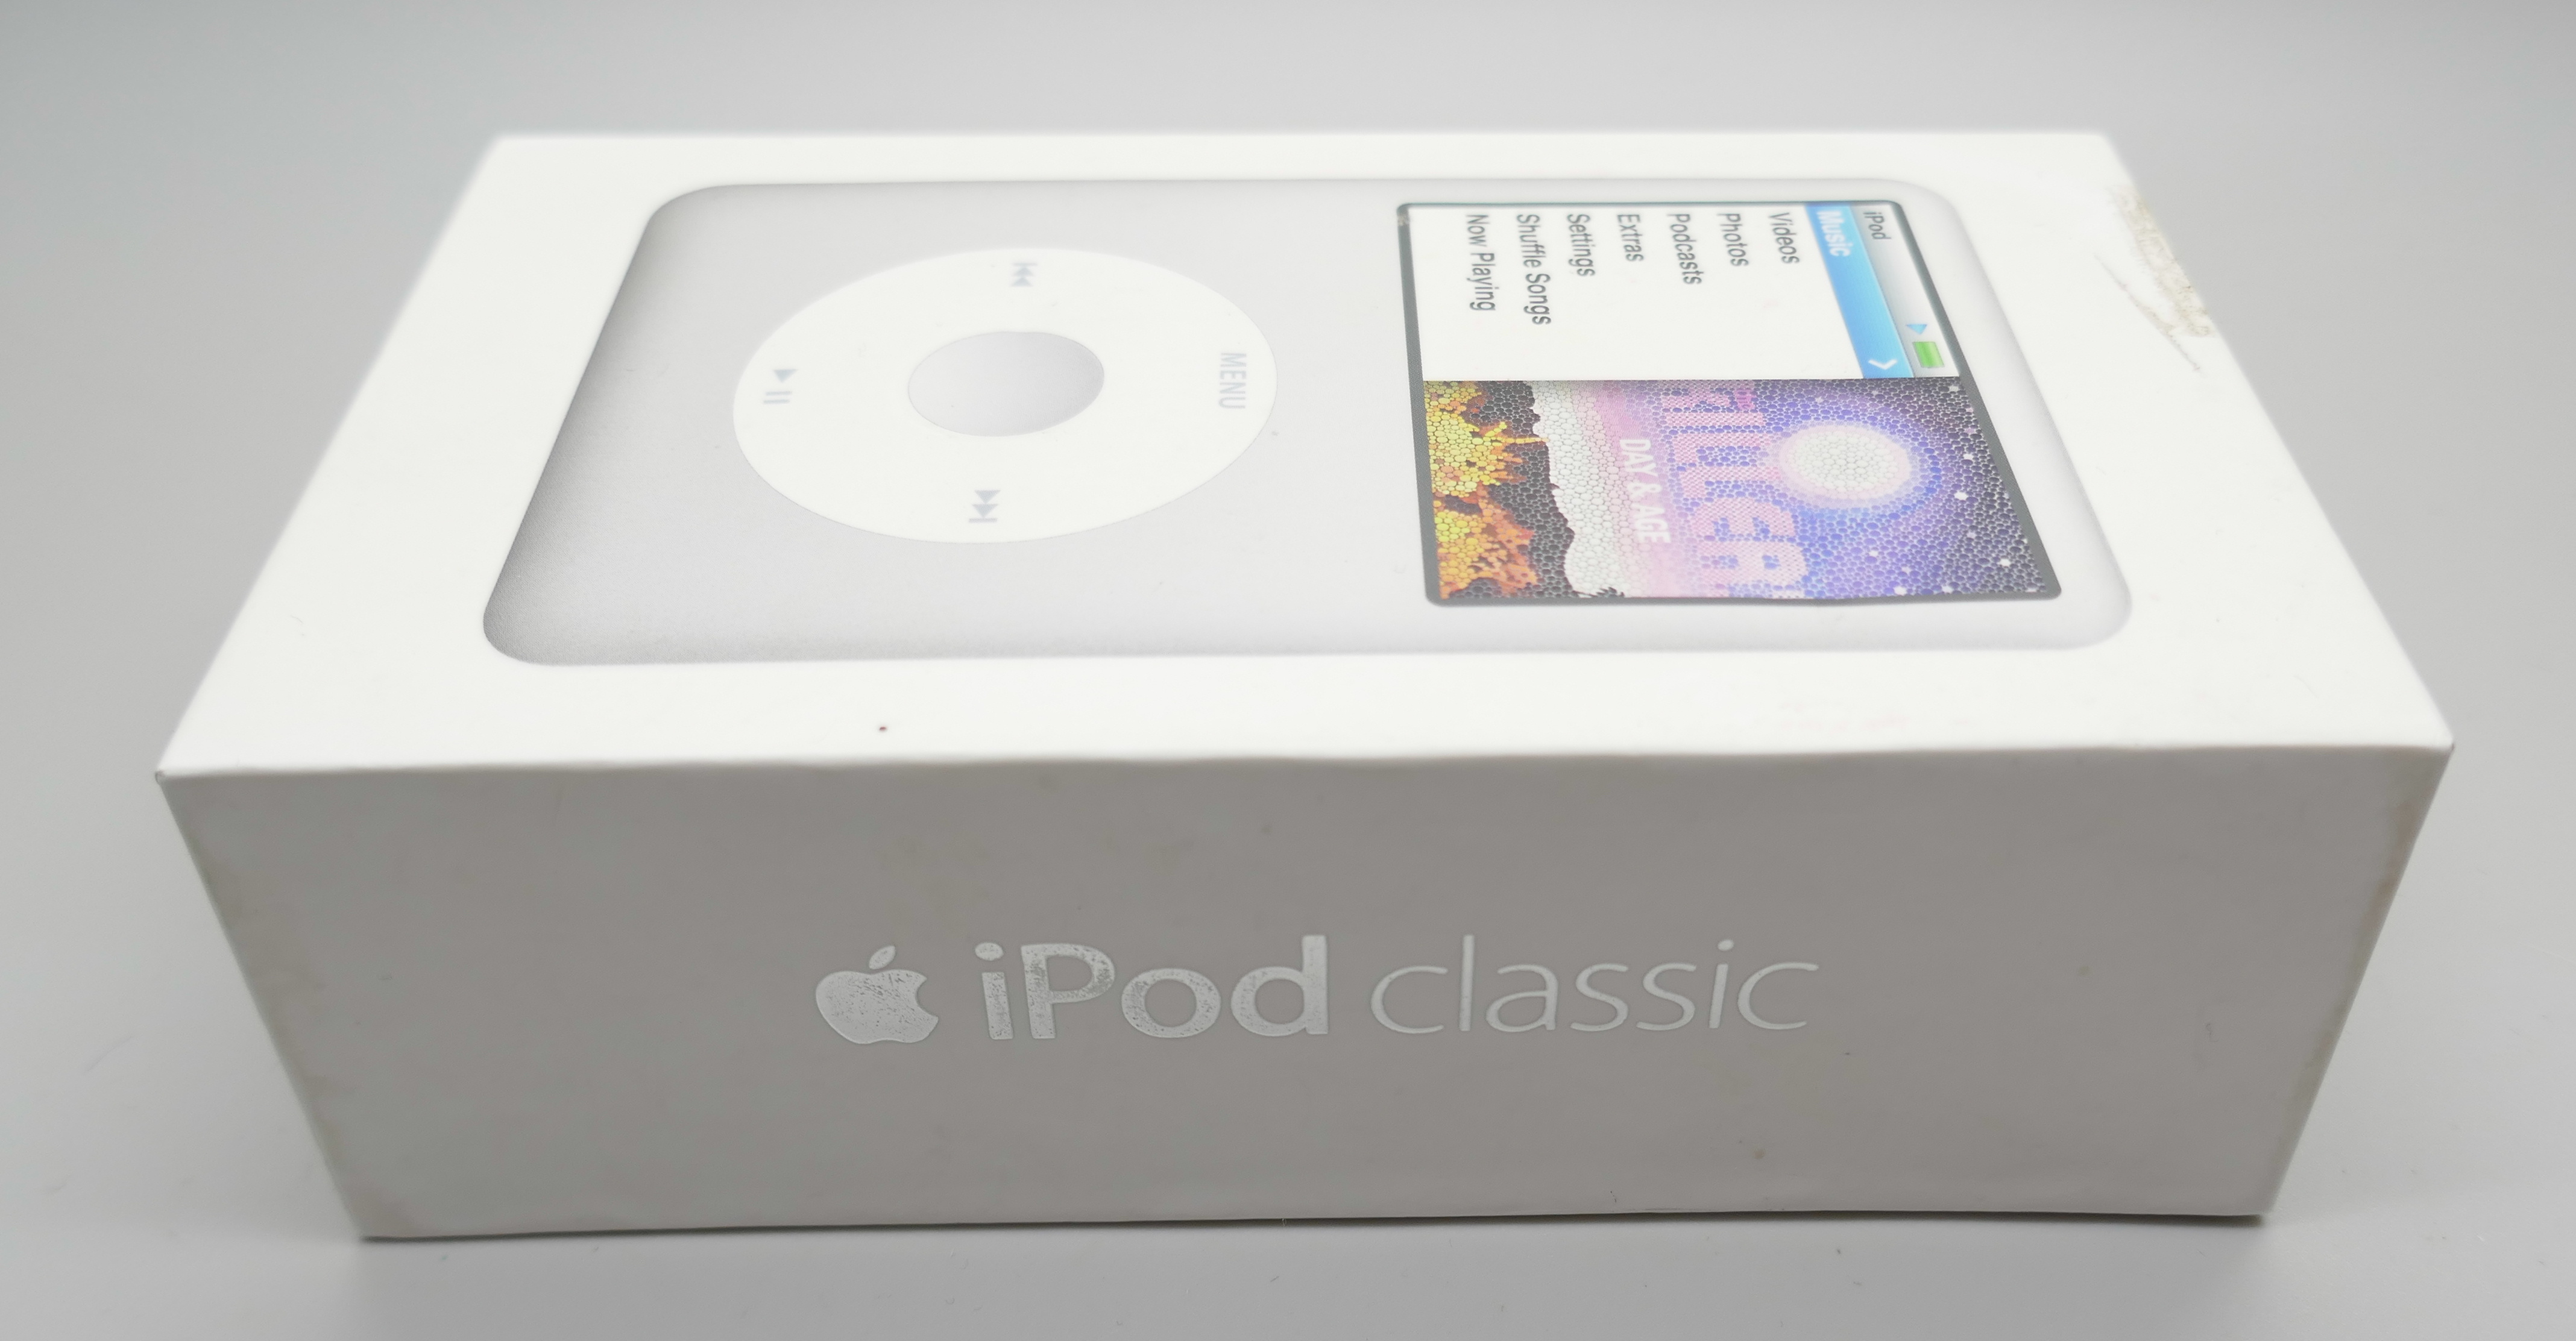 An Apple Ipod Classic